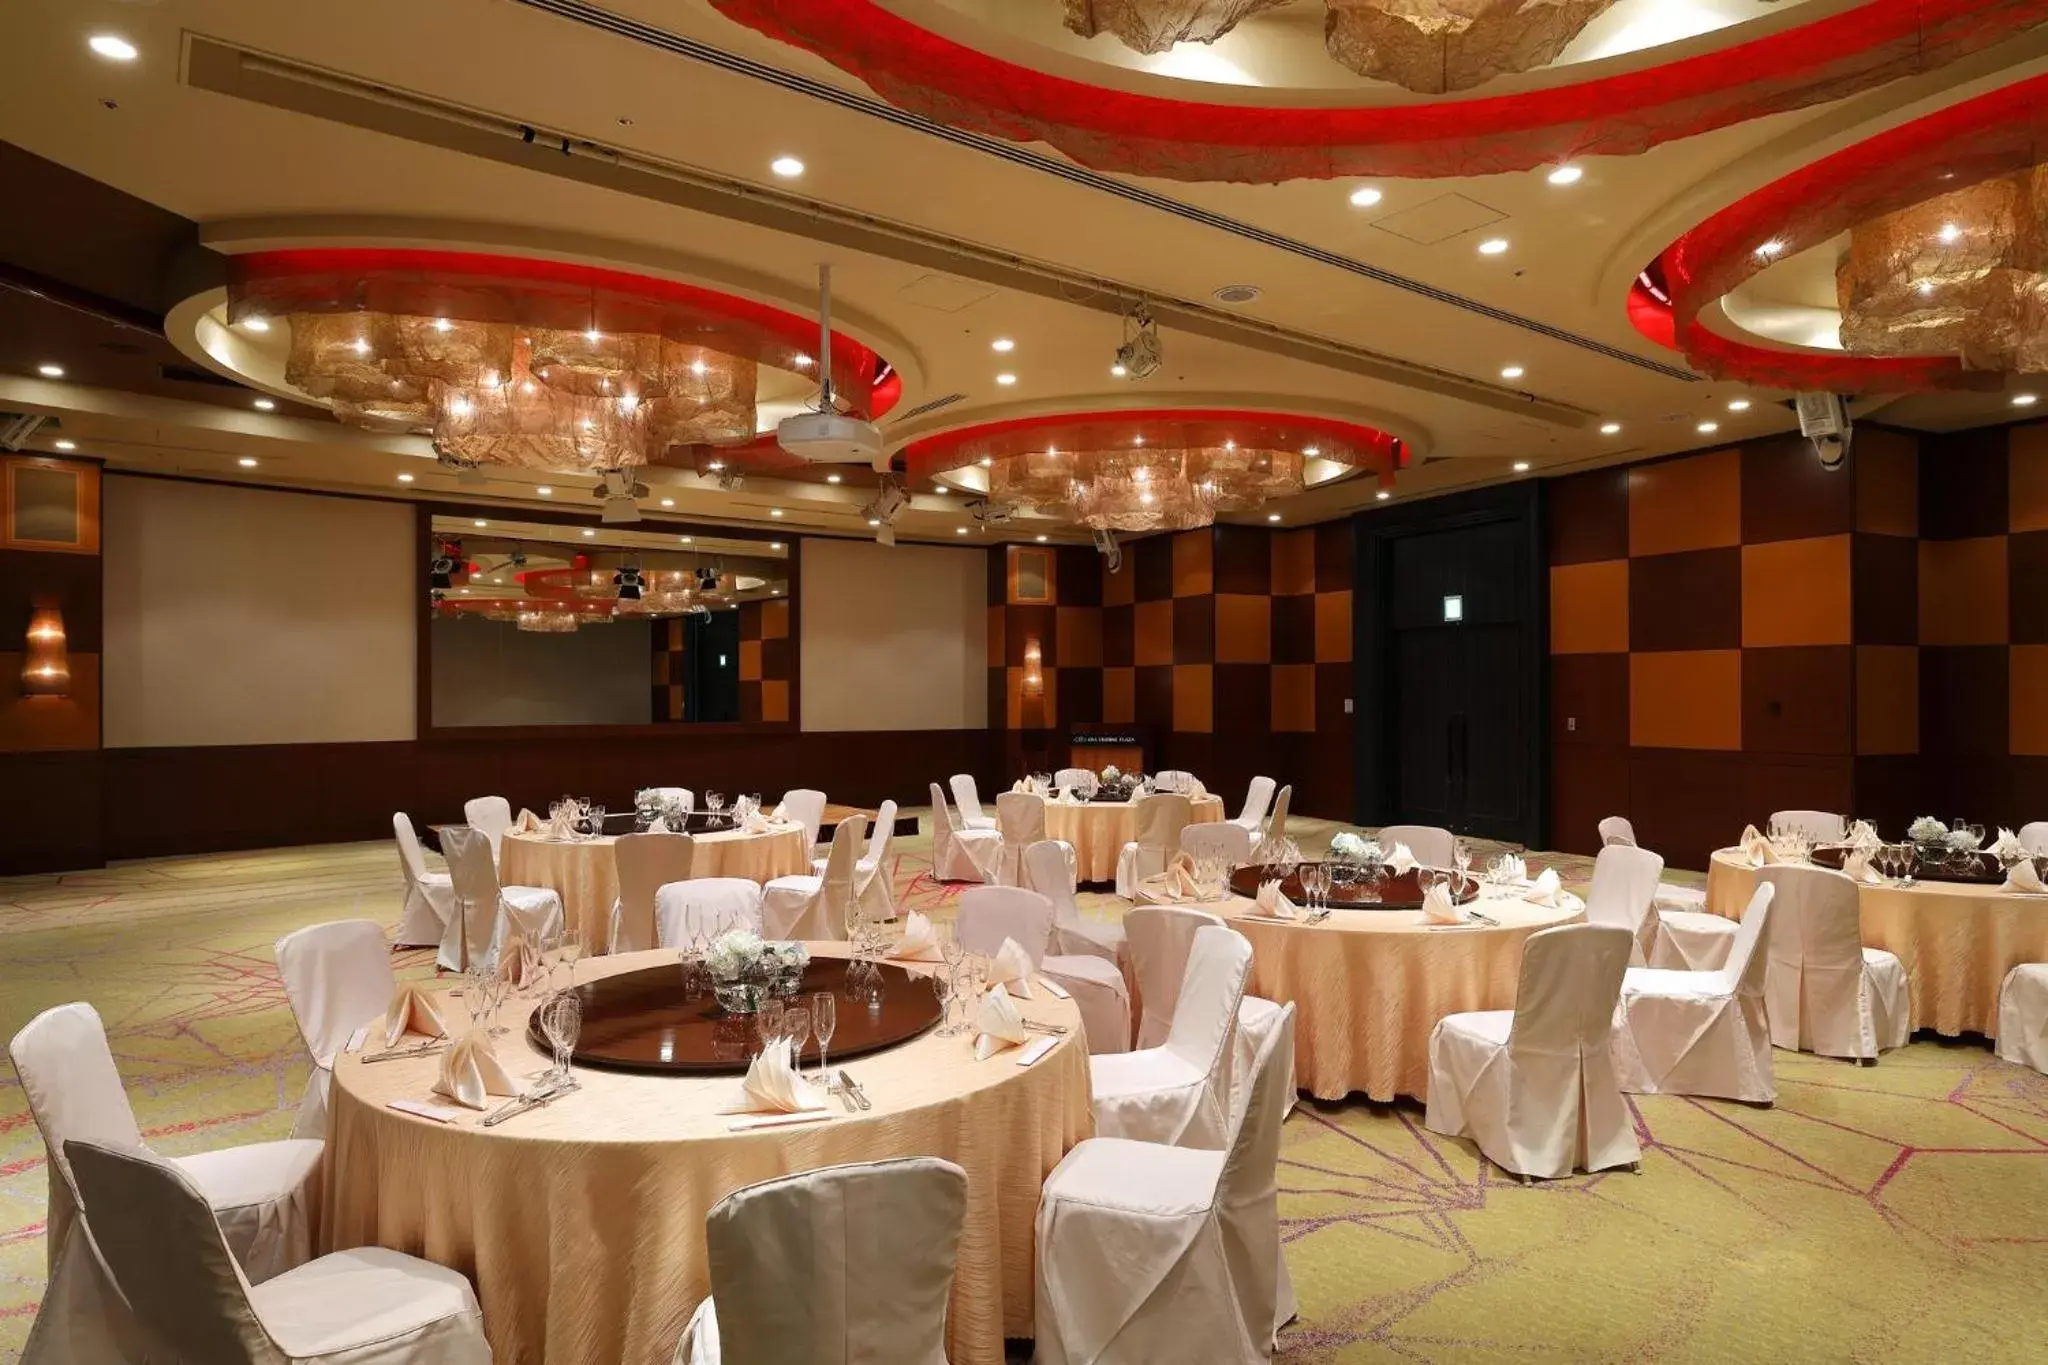 Banquet/Function facilities, Banquet Facilities in ANA Crowne Plaza Okayama, an IHG Hotel